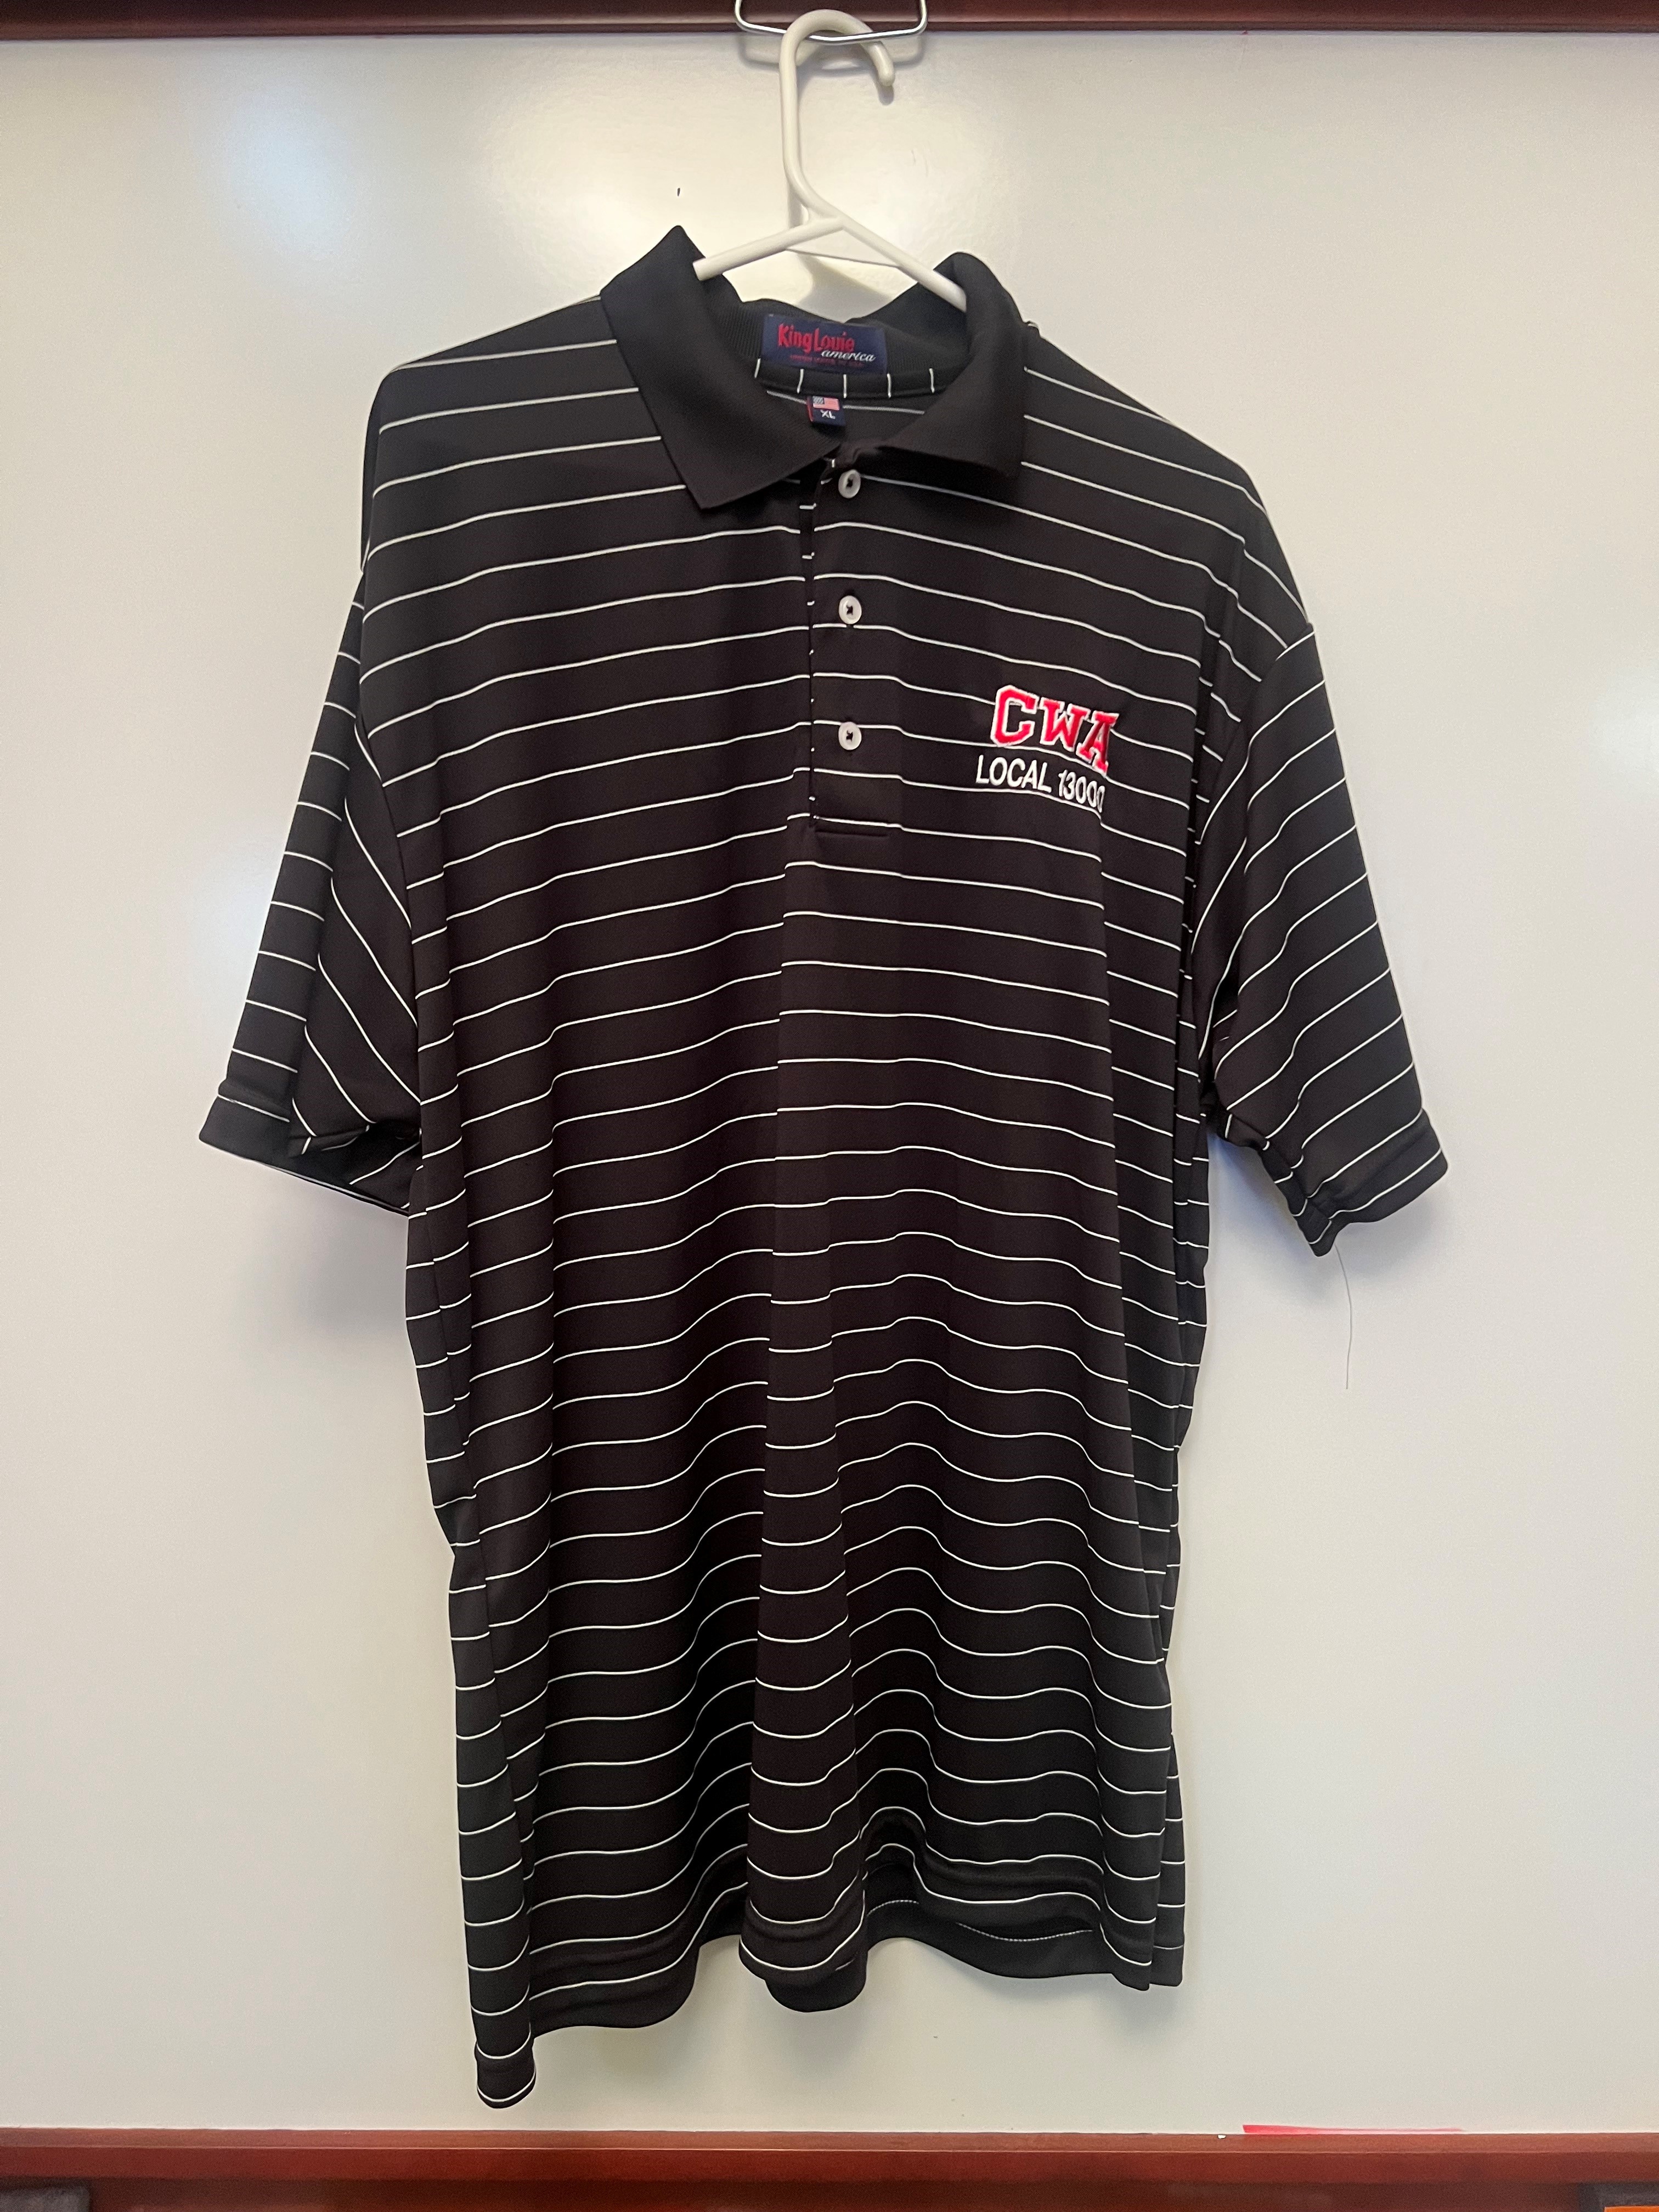 Sunset Black/White Stripe Golf Shirt